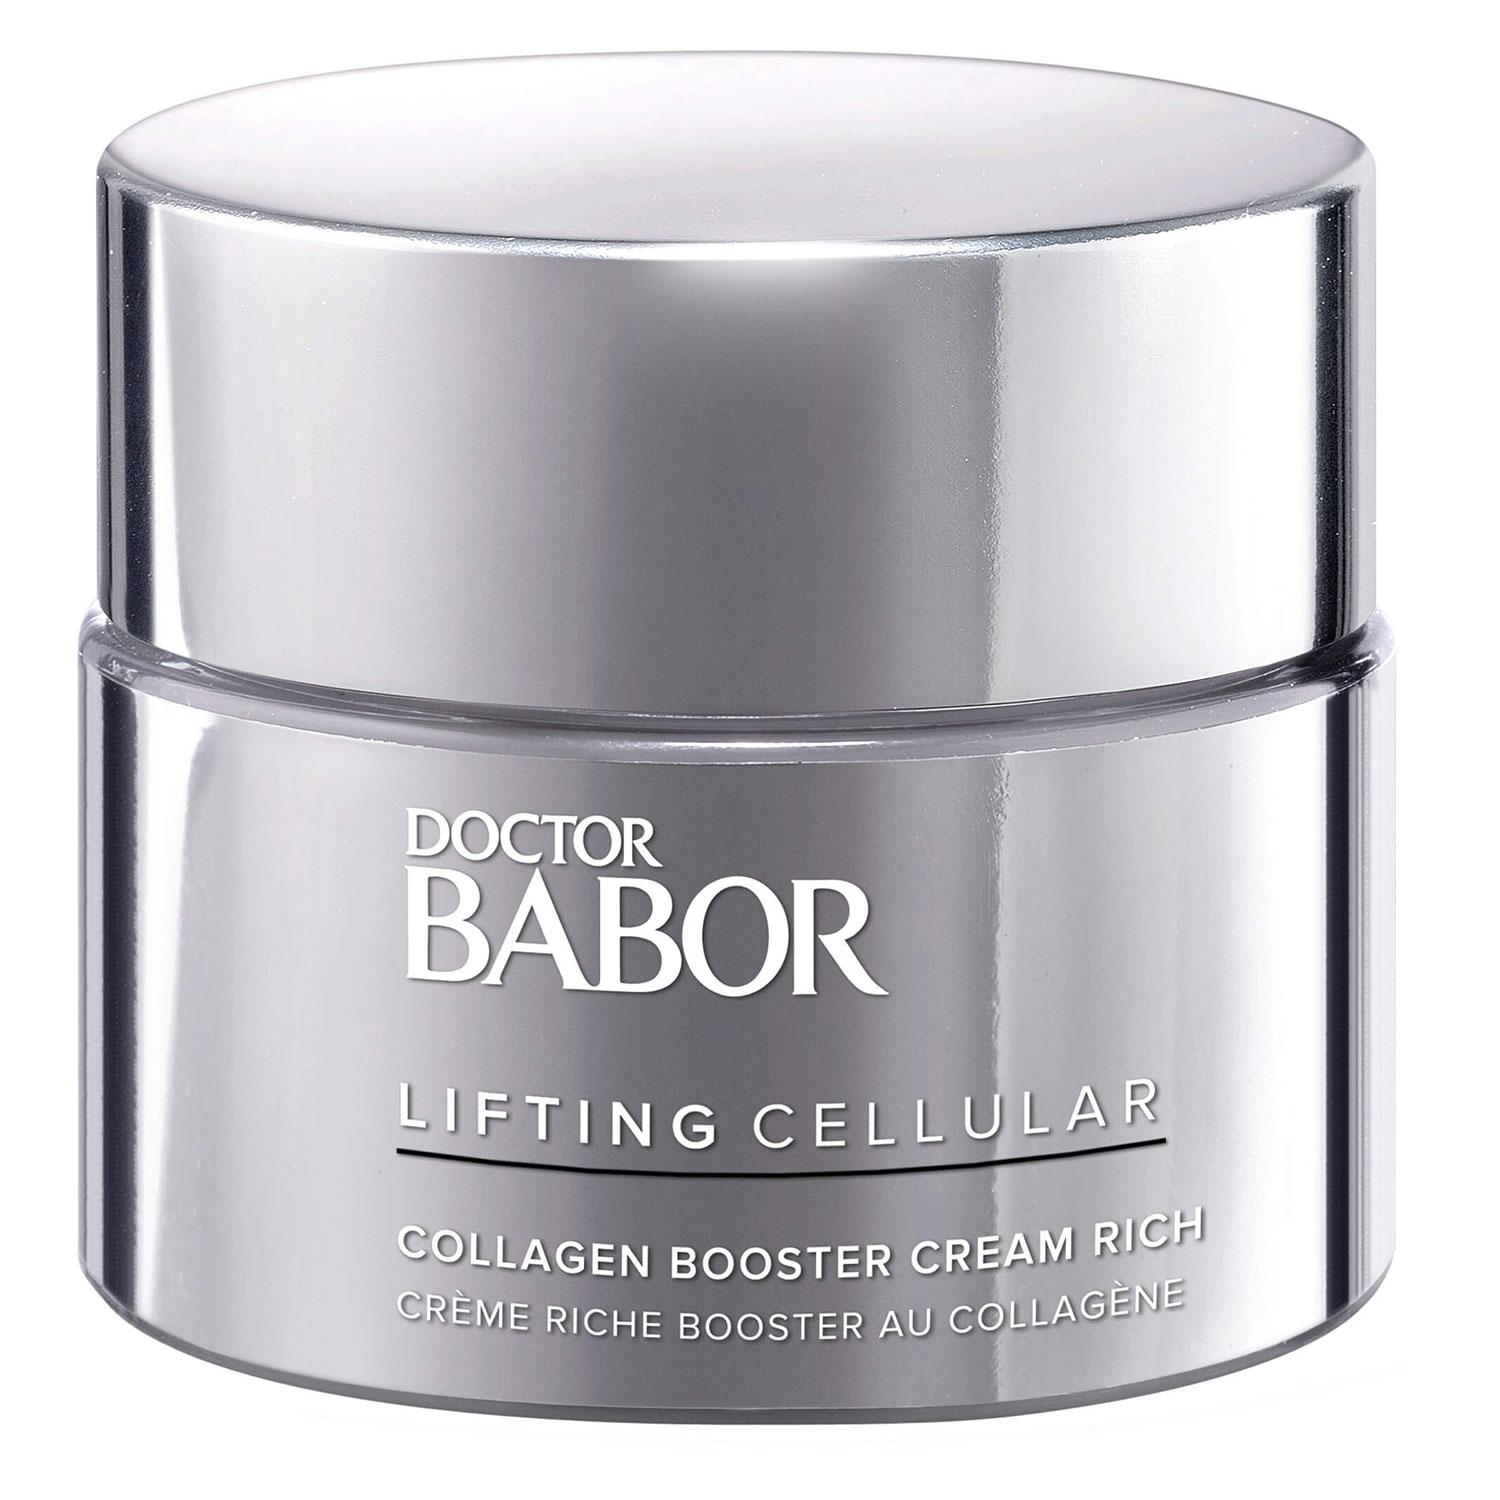 DOCTOR BABOR - Collagen Booster Cream Rich